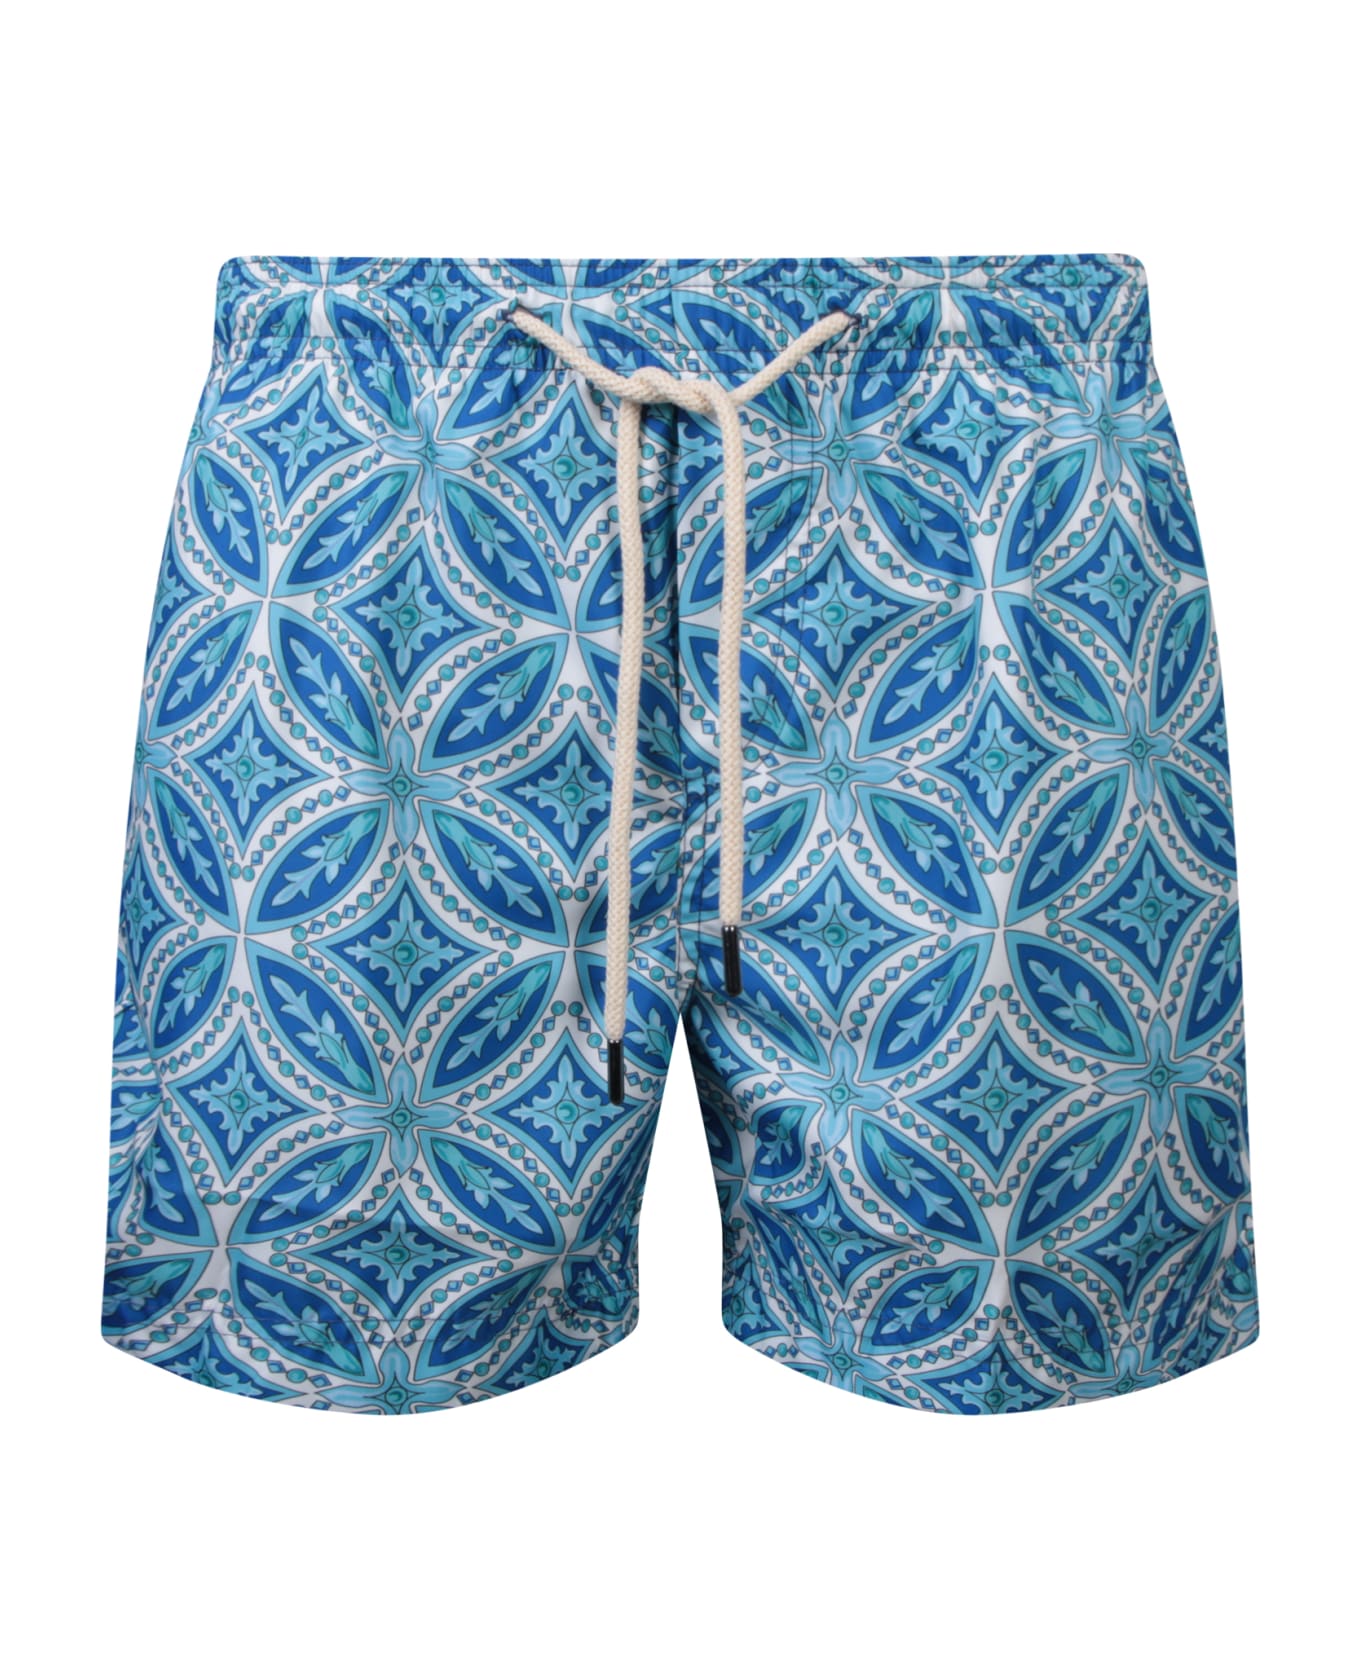 Peninsula Swimwear Patterned Swim Shorts In Sky Blue/blue/white - White